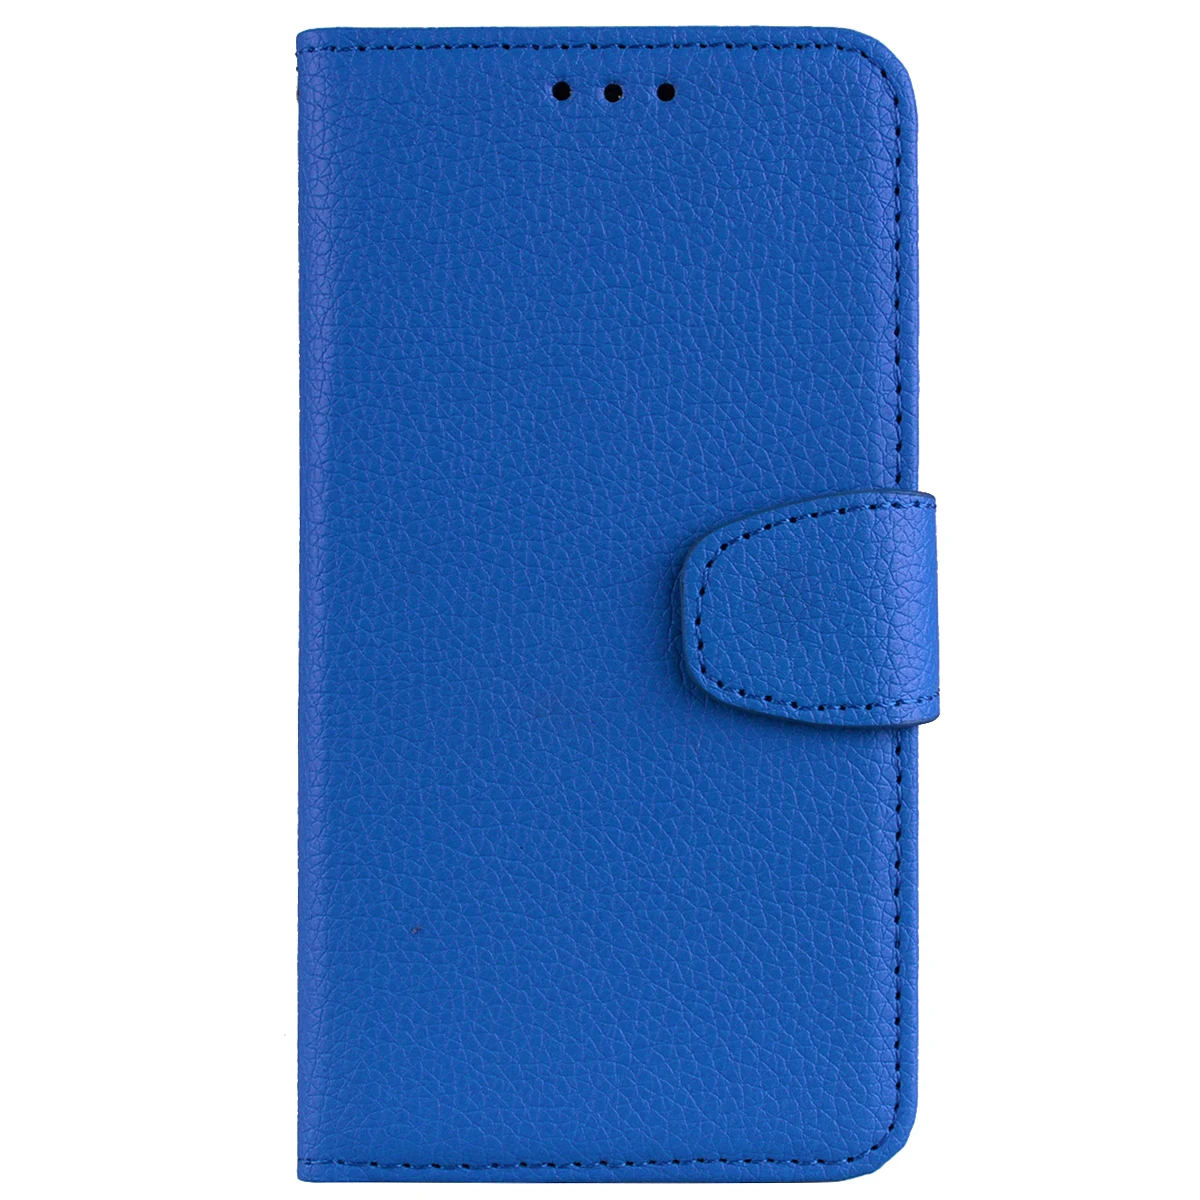 S8 S9 S10 S5 S6 S7 чехол для телефона из искусственной кожи чехол-портмоне для samsung Galaxy A6 A7 A8 J4 J6 A3 A5 J3 J5 J7 Флип Стенд кожаный чехол